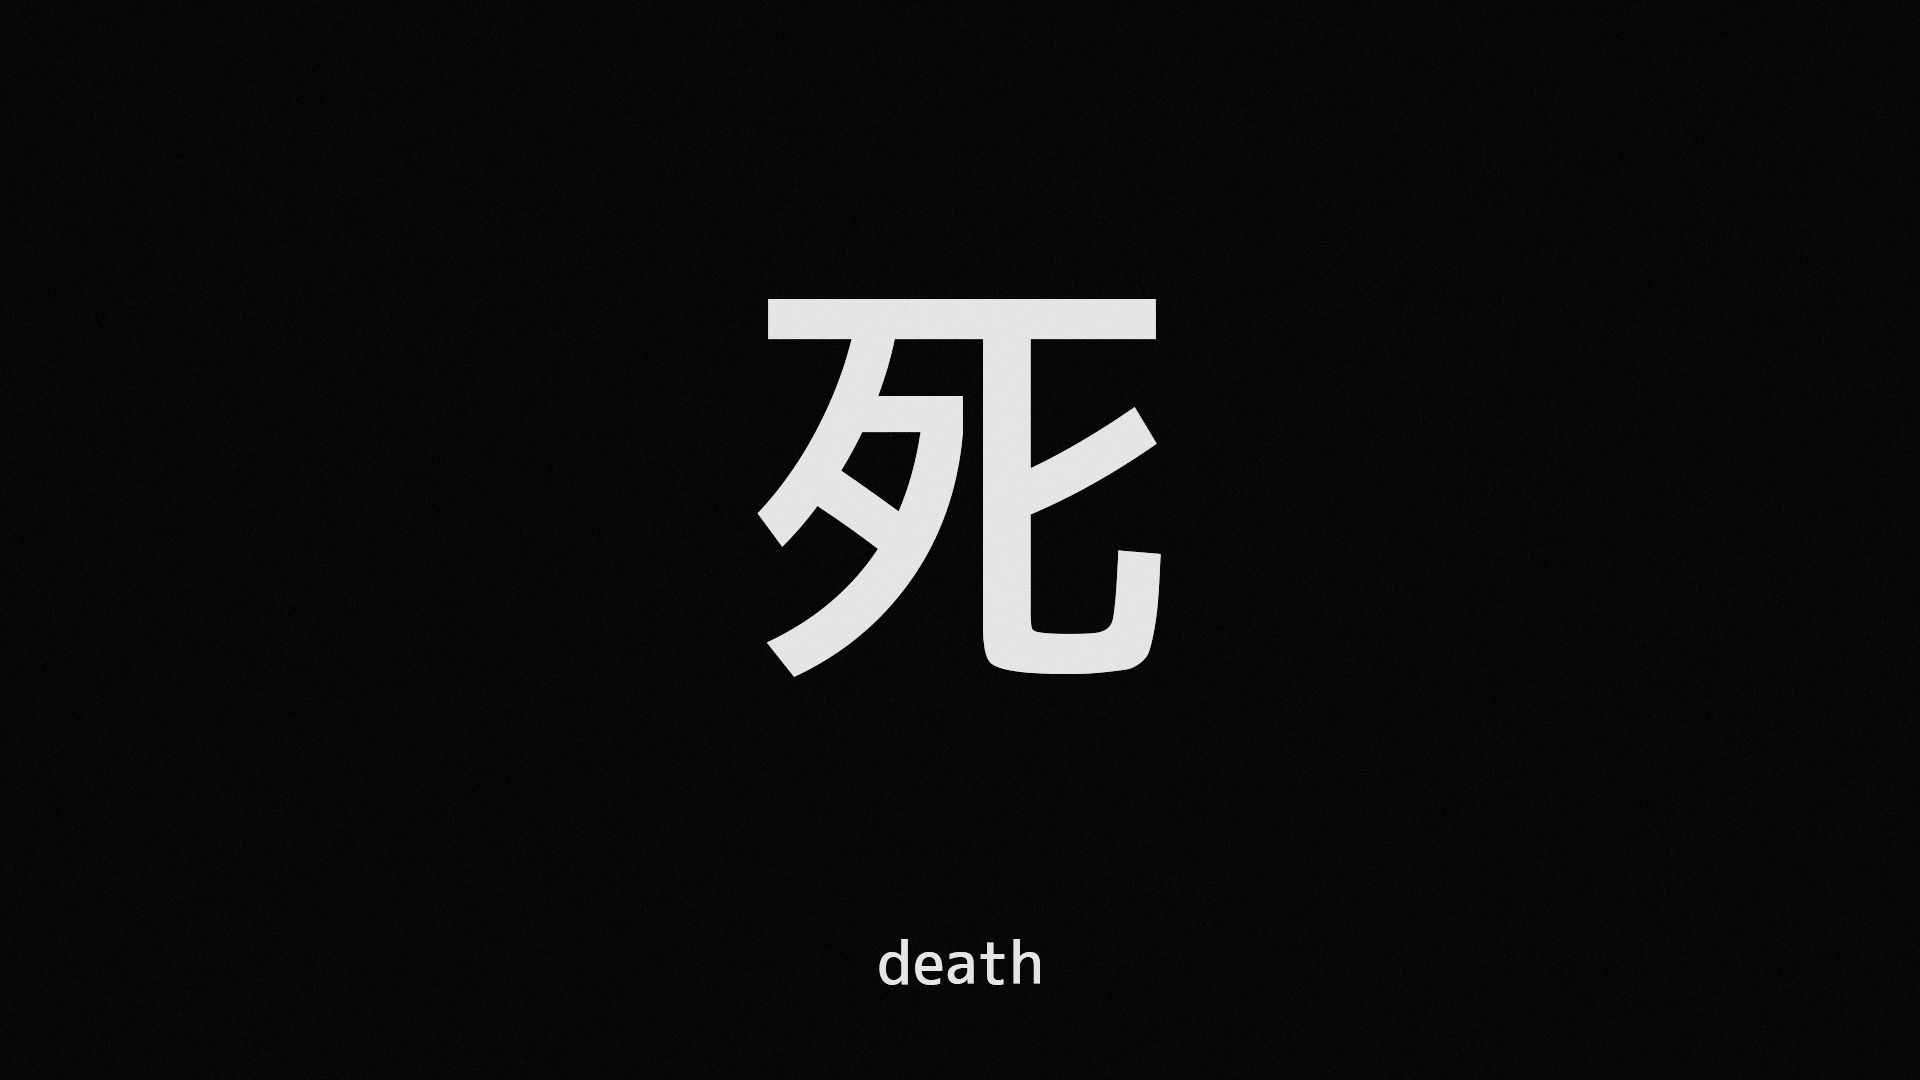 HD desktop wallpaper: Death, Typography, Artistic, Kanji download free picture